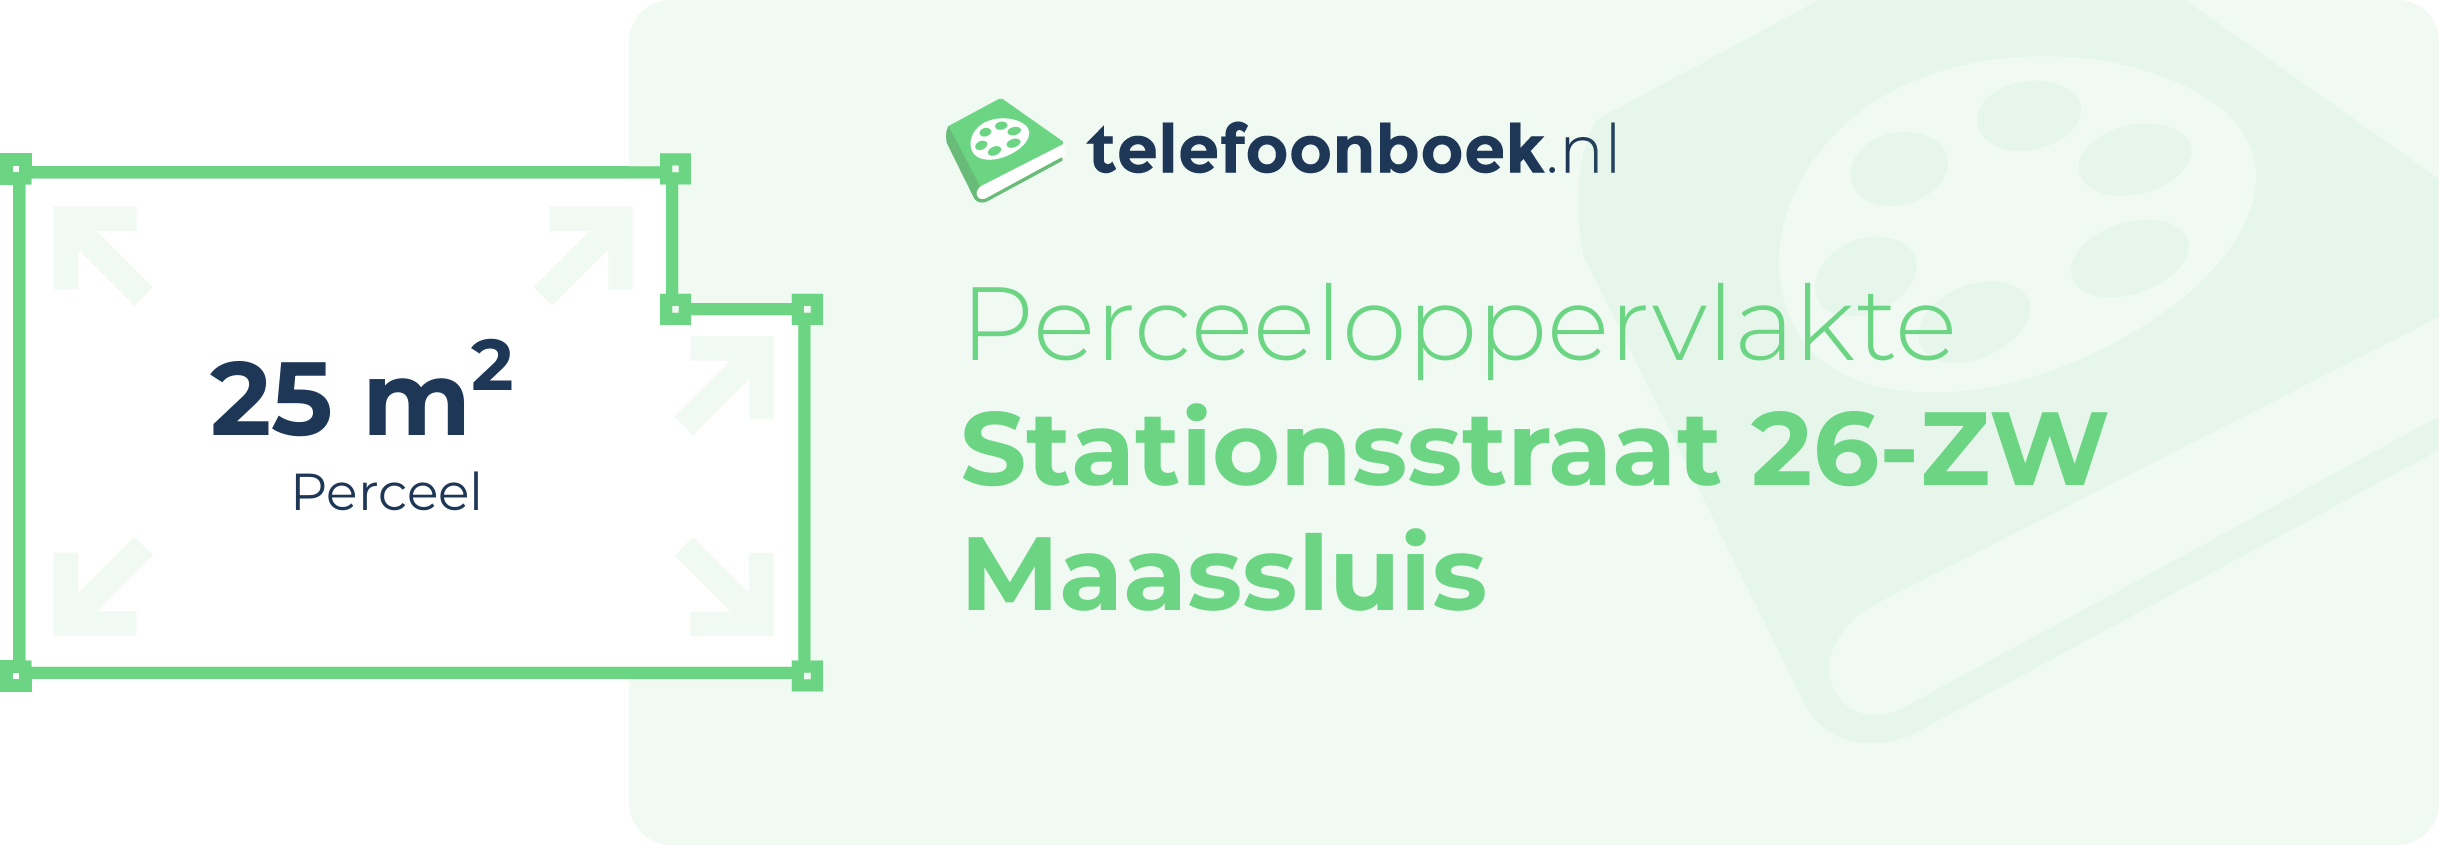 Perceeloppervlakte Stationsstraat 26-ZW Maassluis